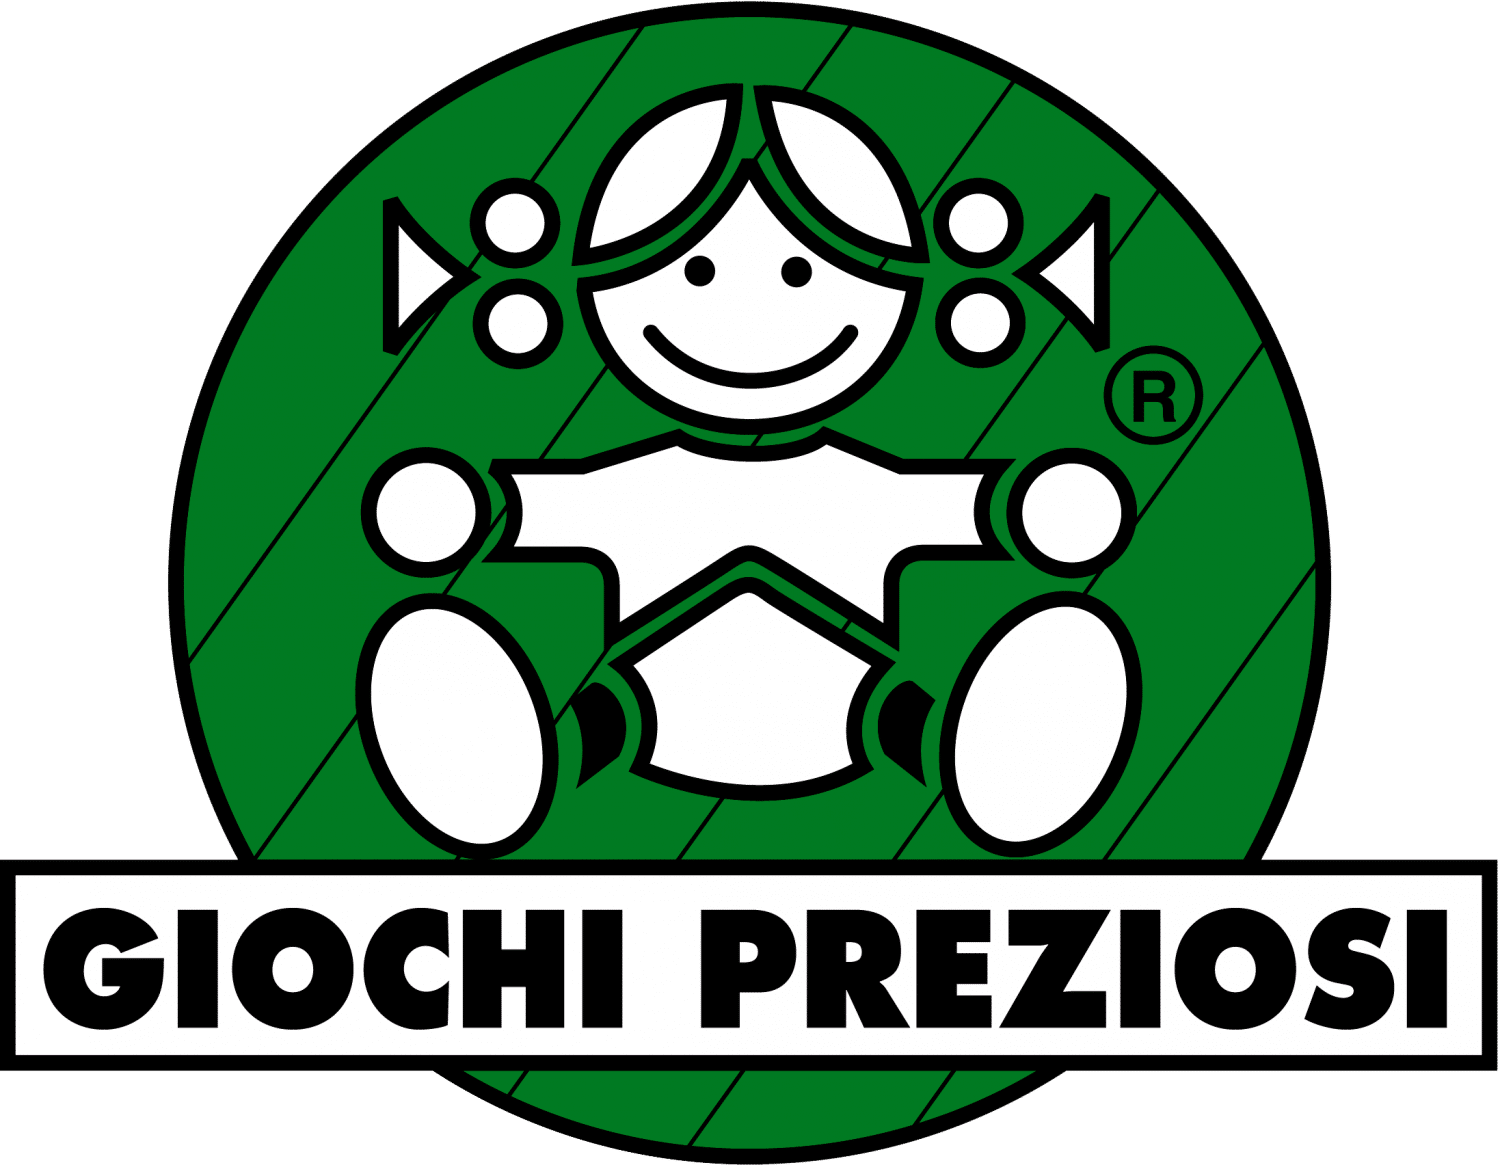 Giochi_Preziosi_logo_2016